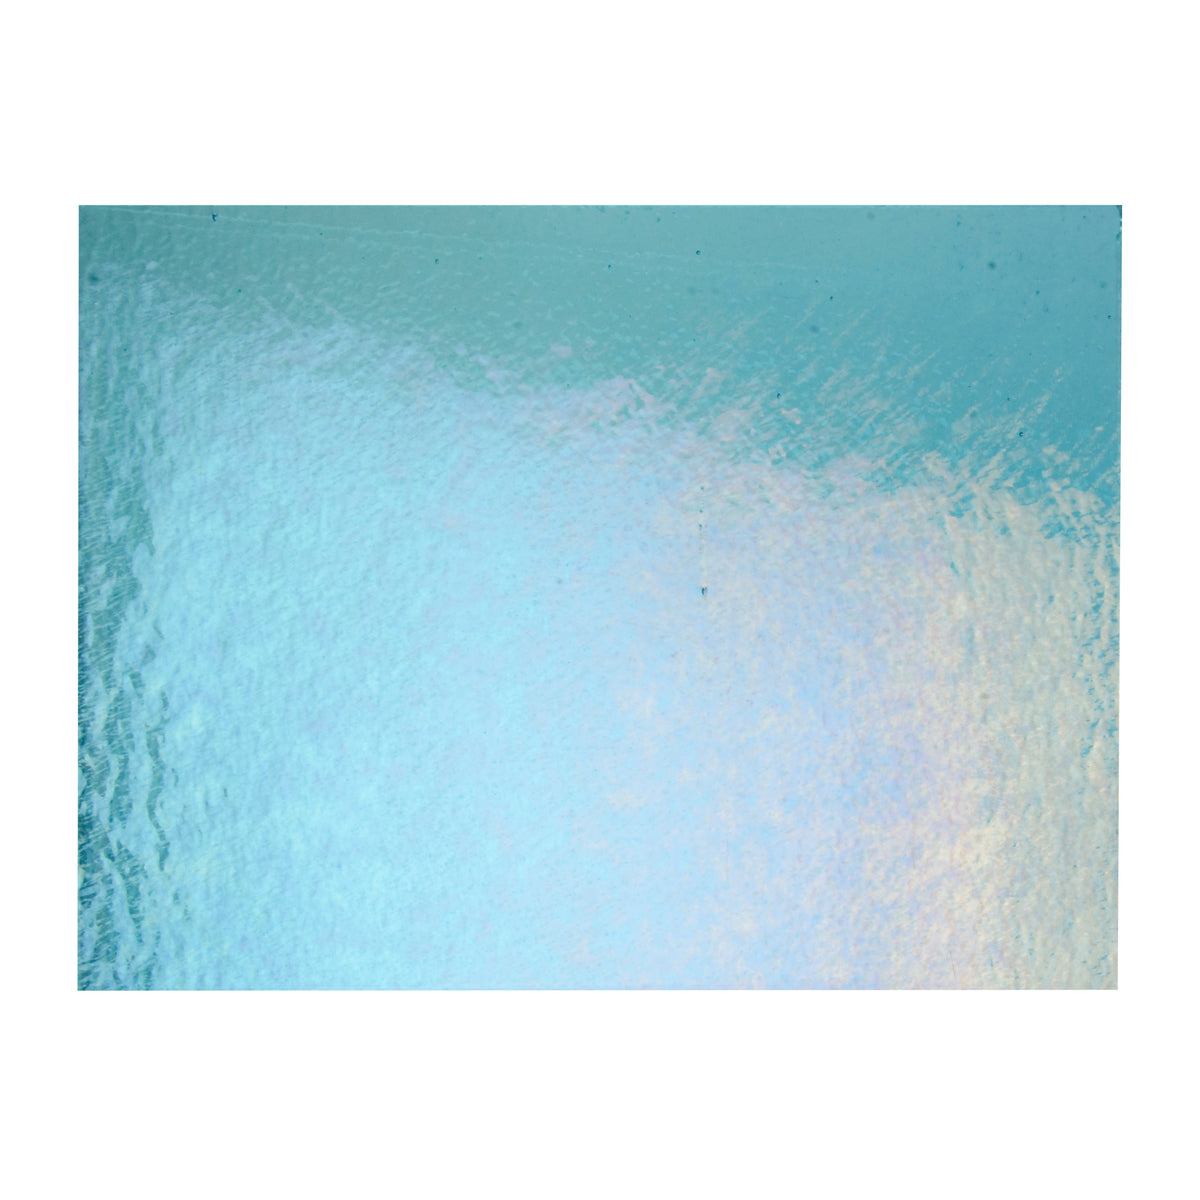 Large Sheet Glass - Light Turquoise Blue Iridescent Rainbow - Transpar ...